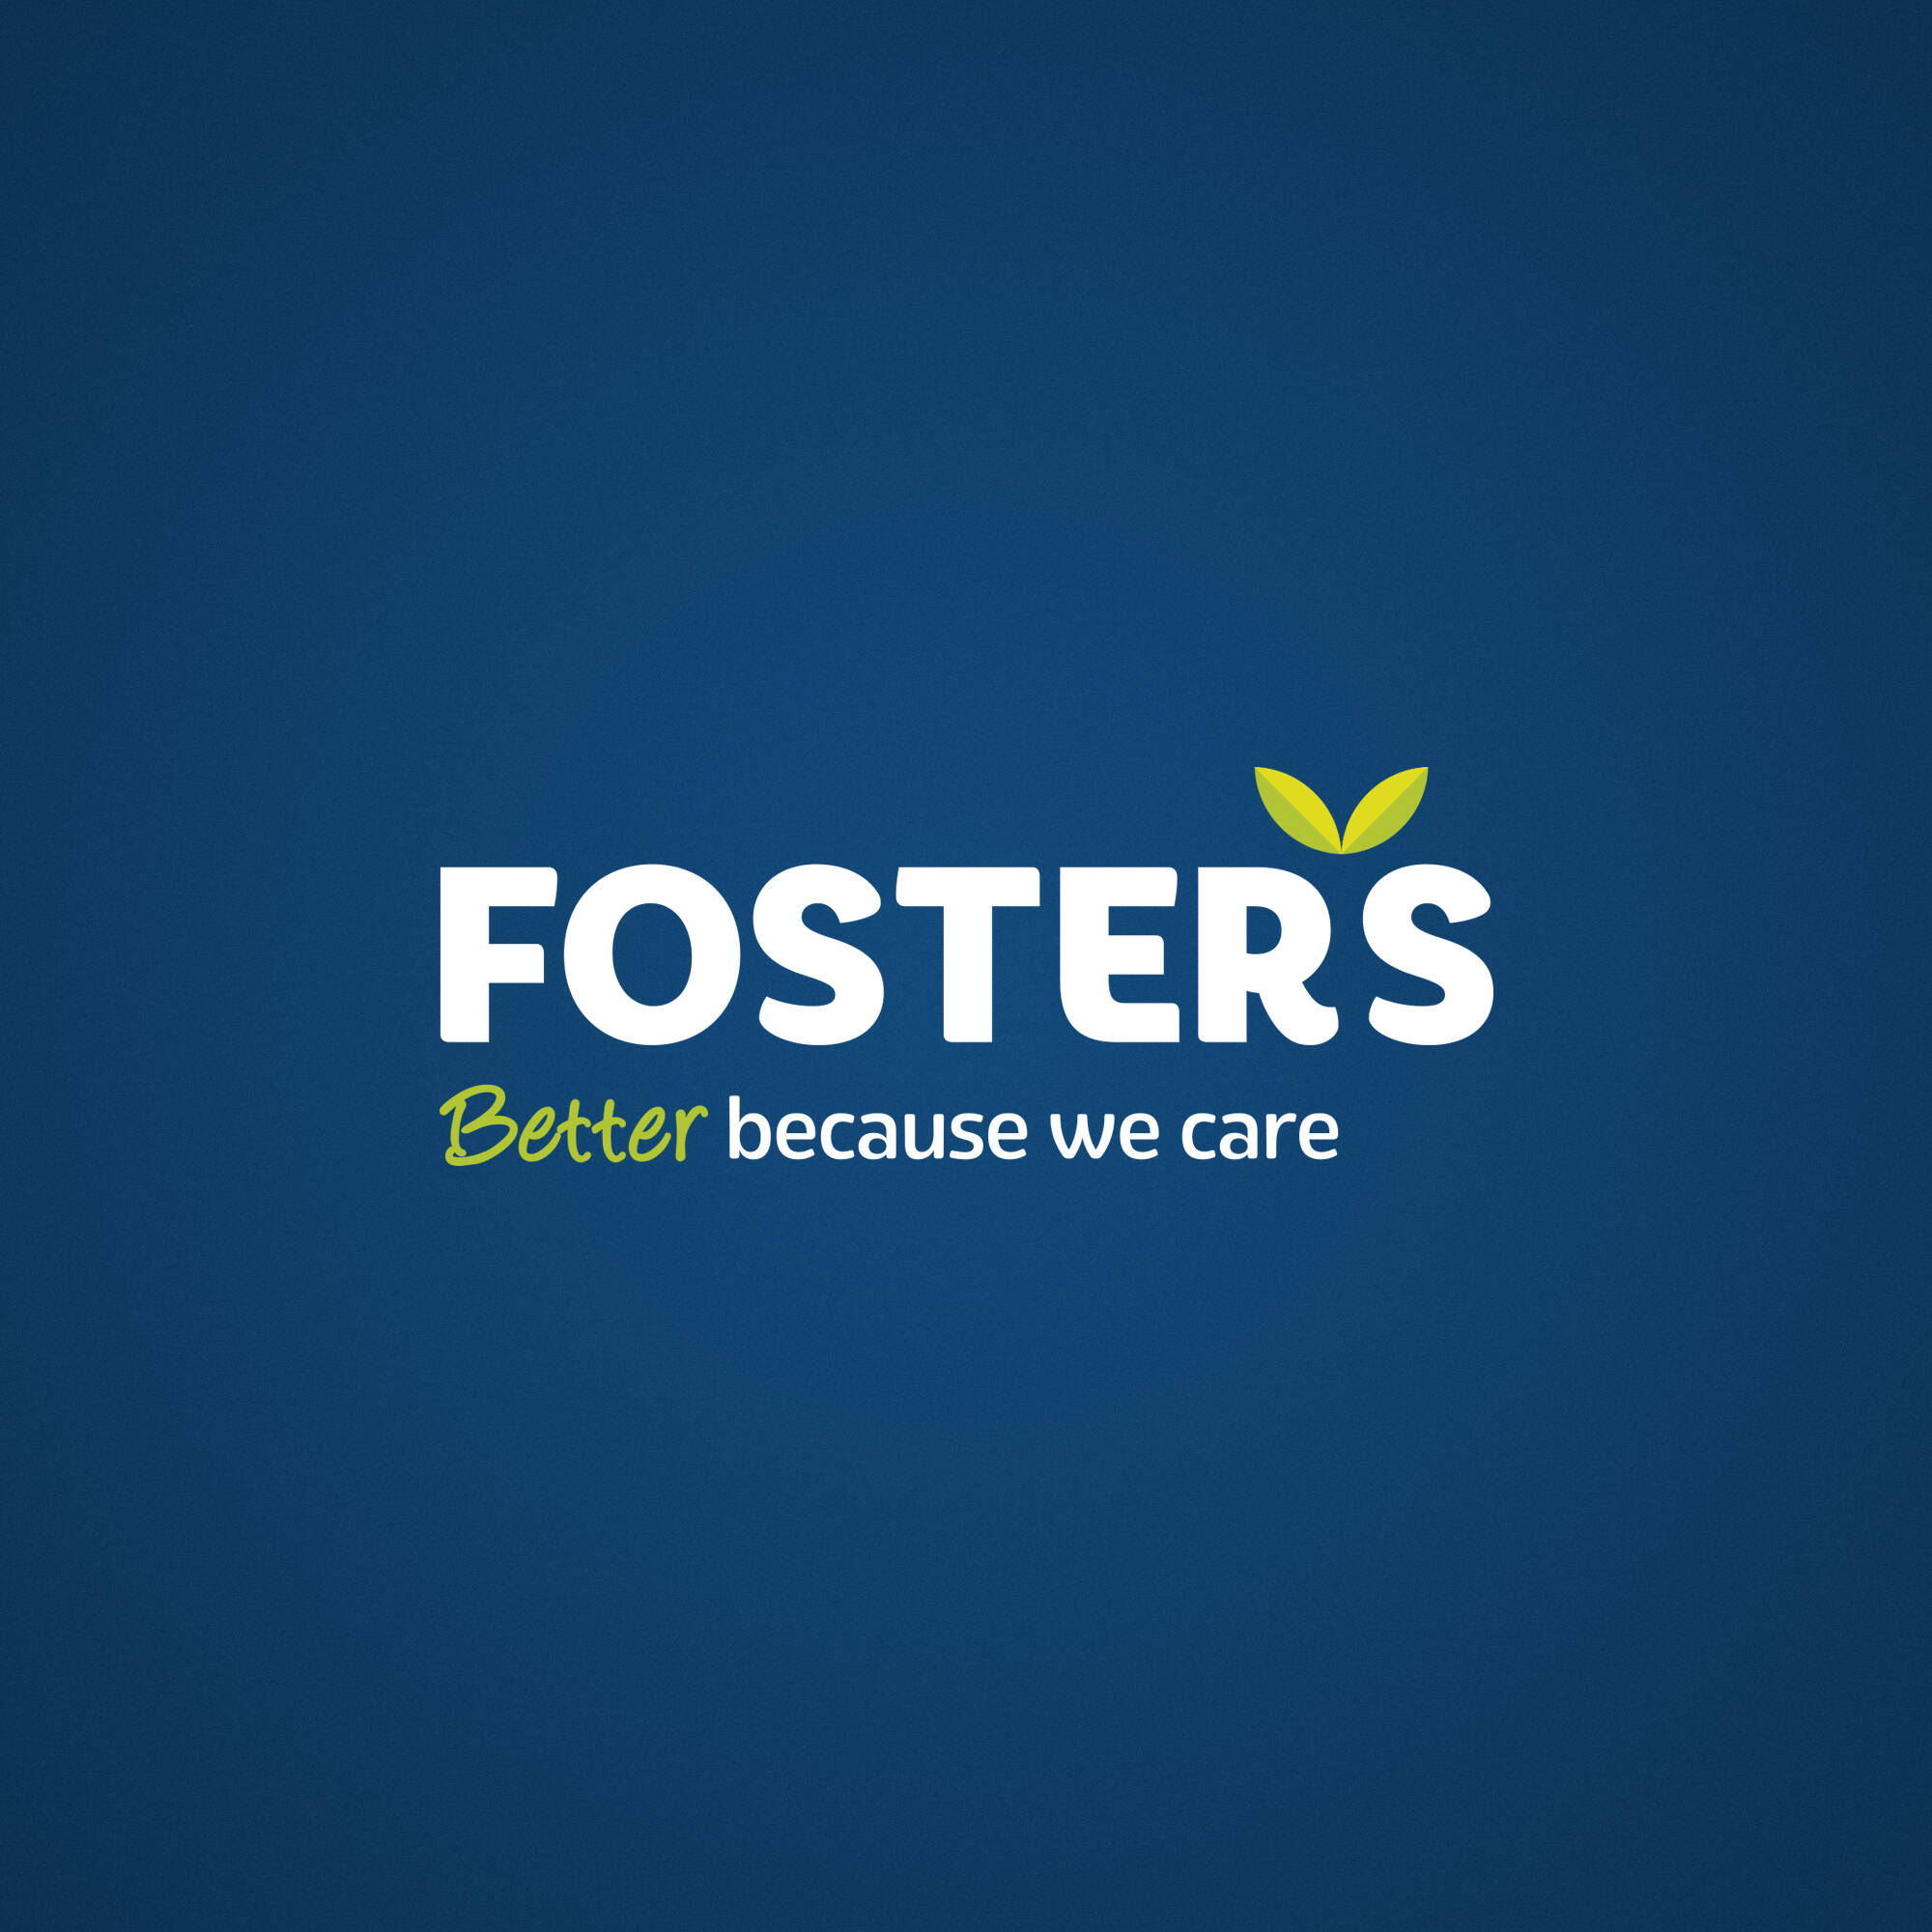 Foster's Brand Identity